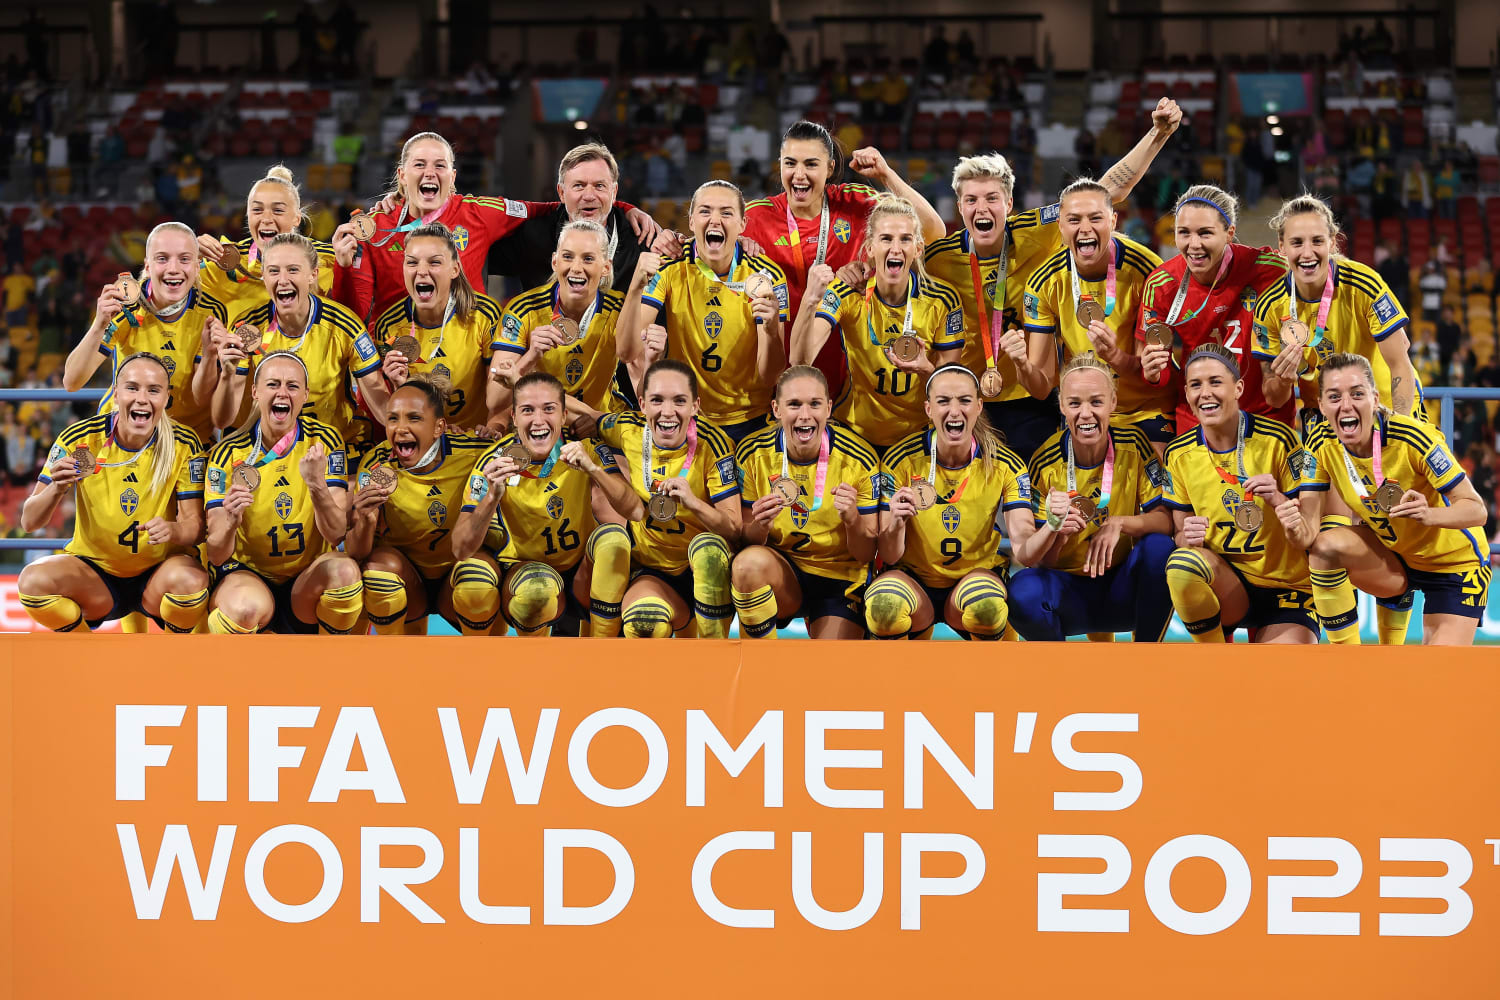 Australia advances to semifinals after penalty shootout vs. France, 2023  FIFA Women's World Cup